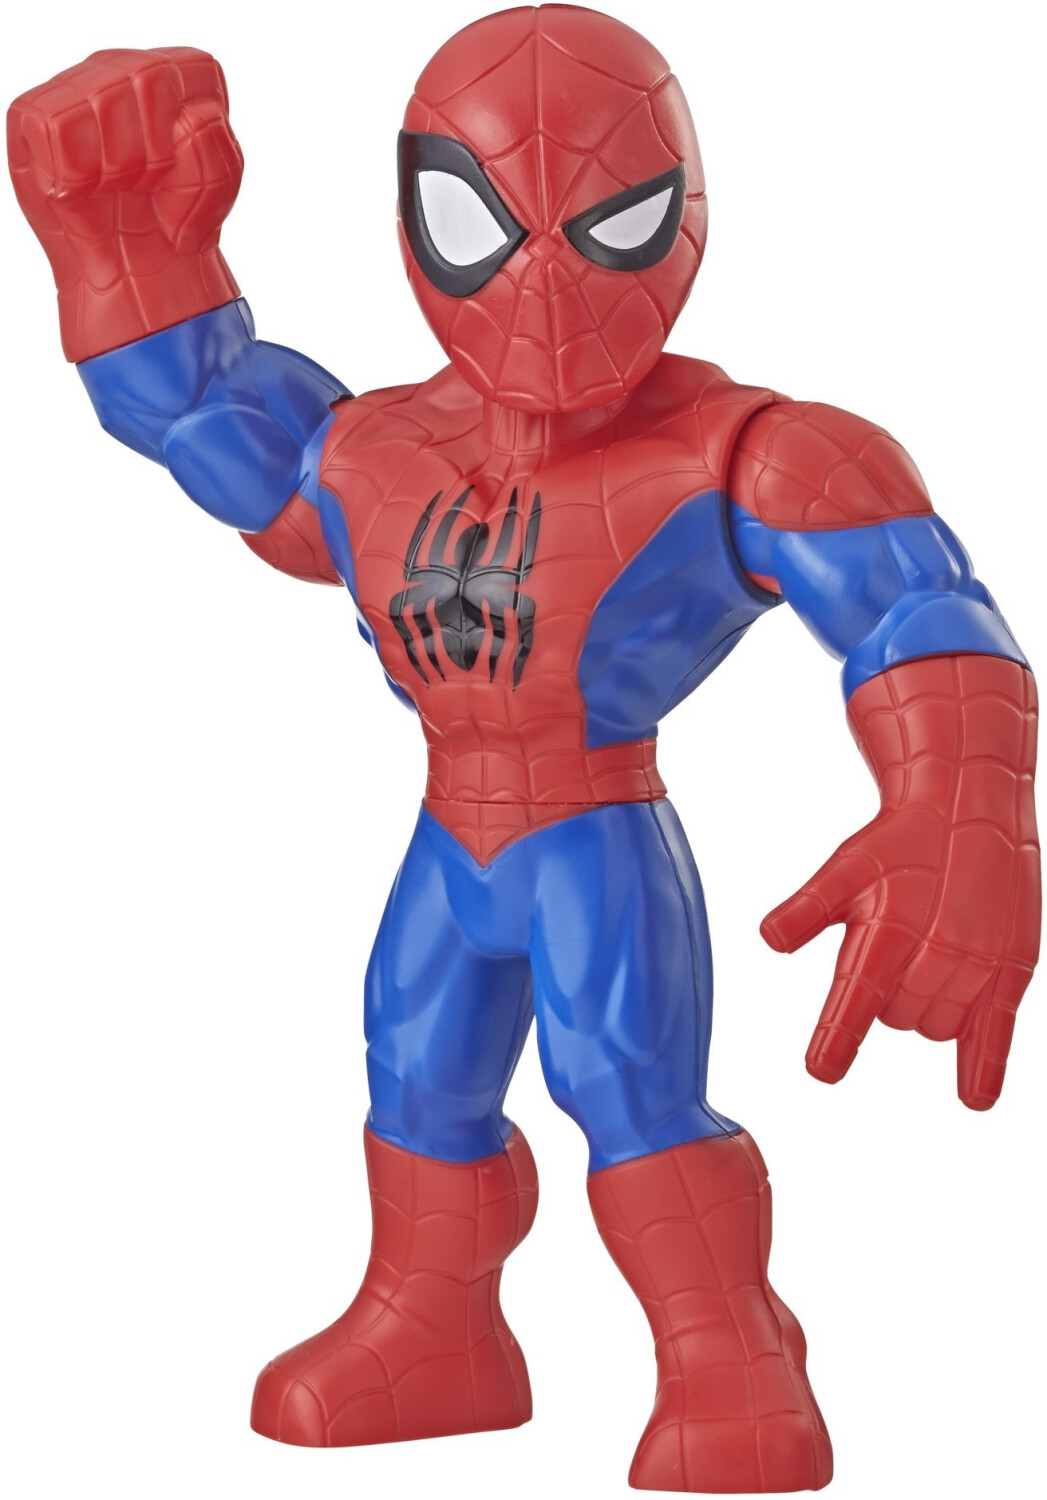 Hasbro Playskool Heroes Marvel Super Hero Adventures - Mega Mighties  Spider-Man au meilleur prix sur